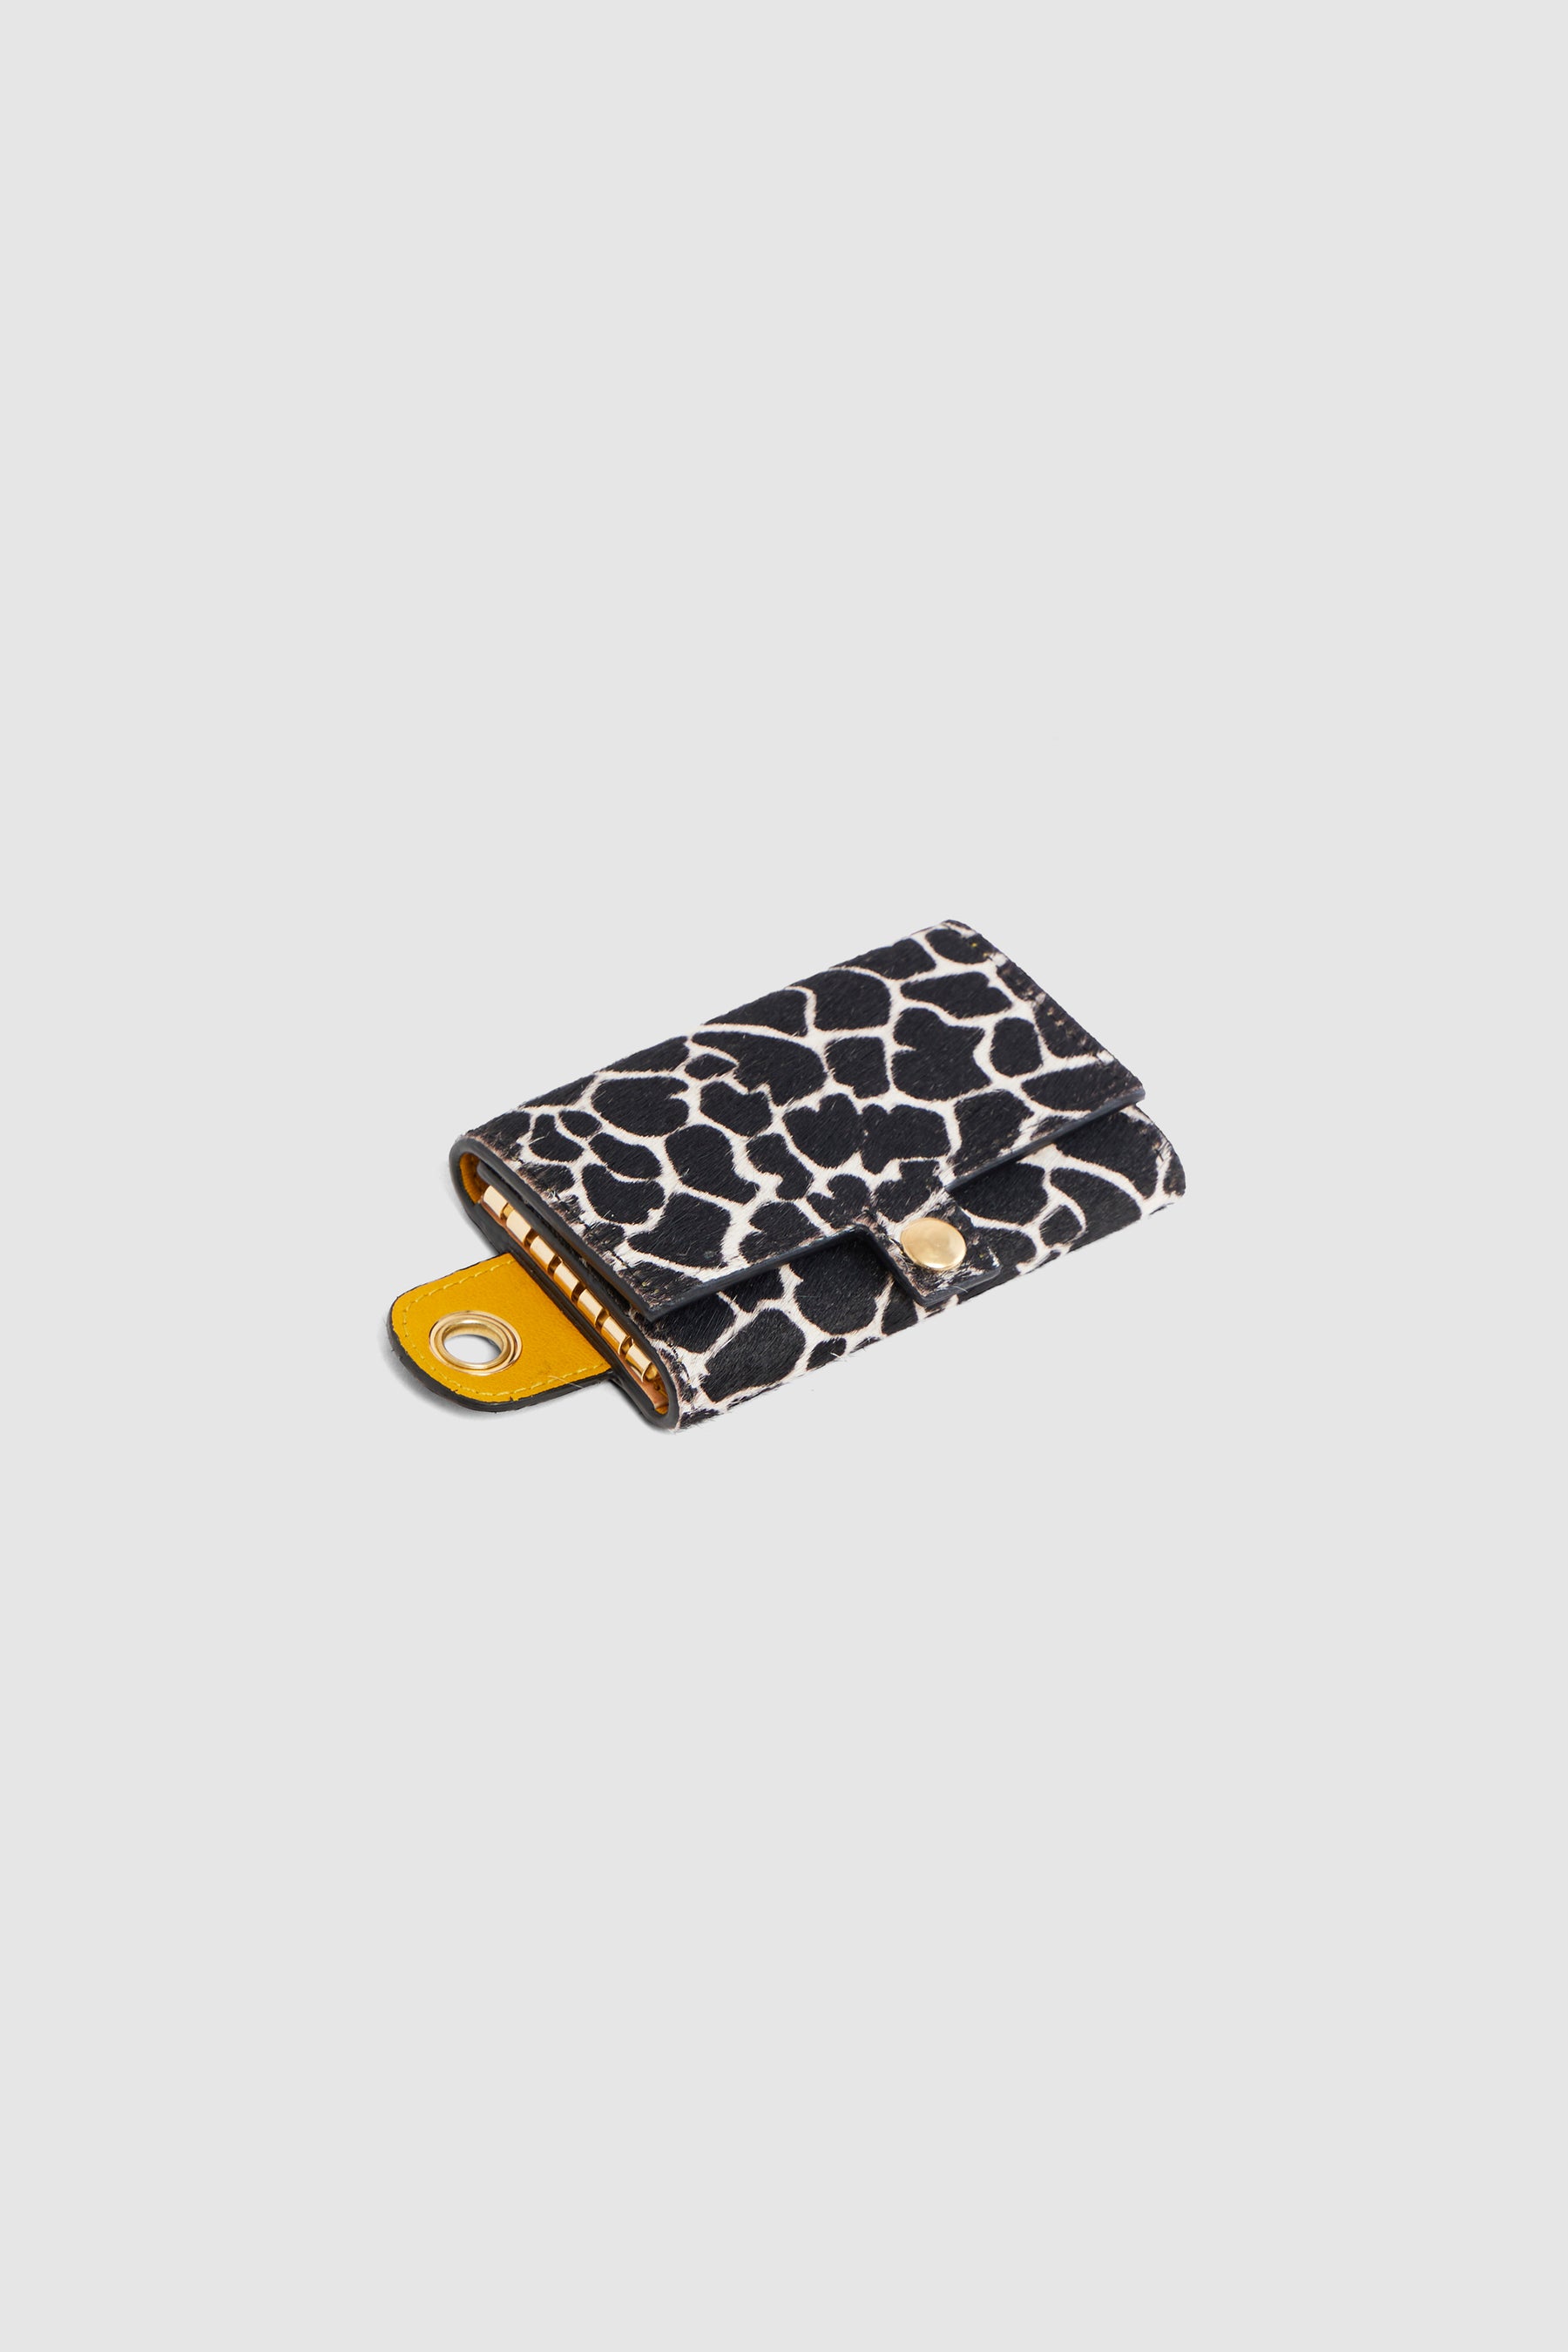 The Minis - 6 key holder in white Giraffe printed leather